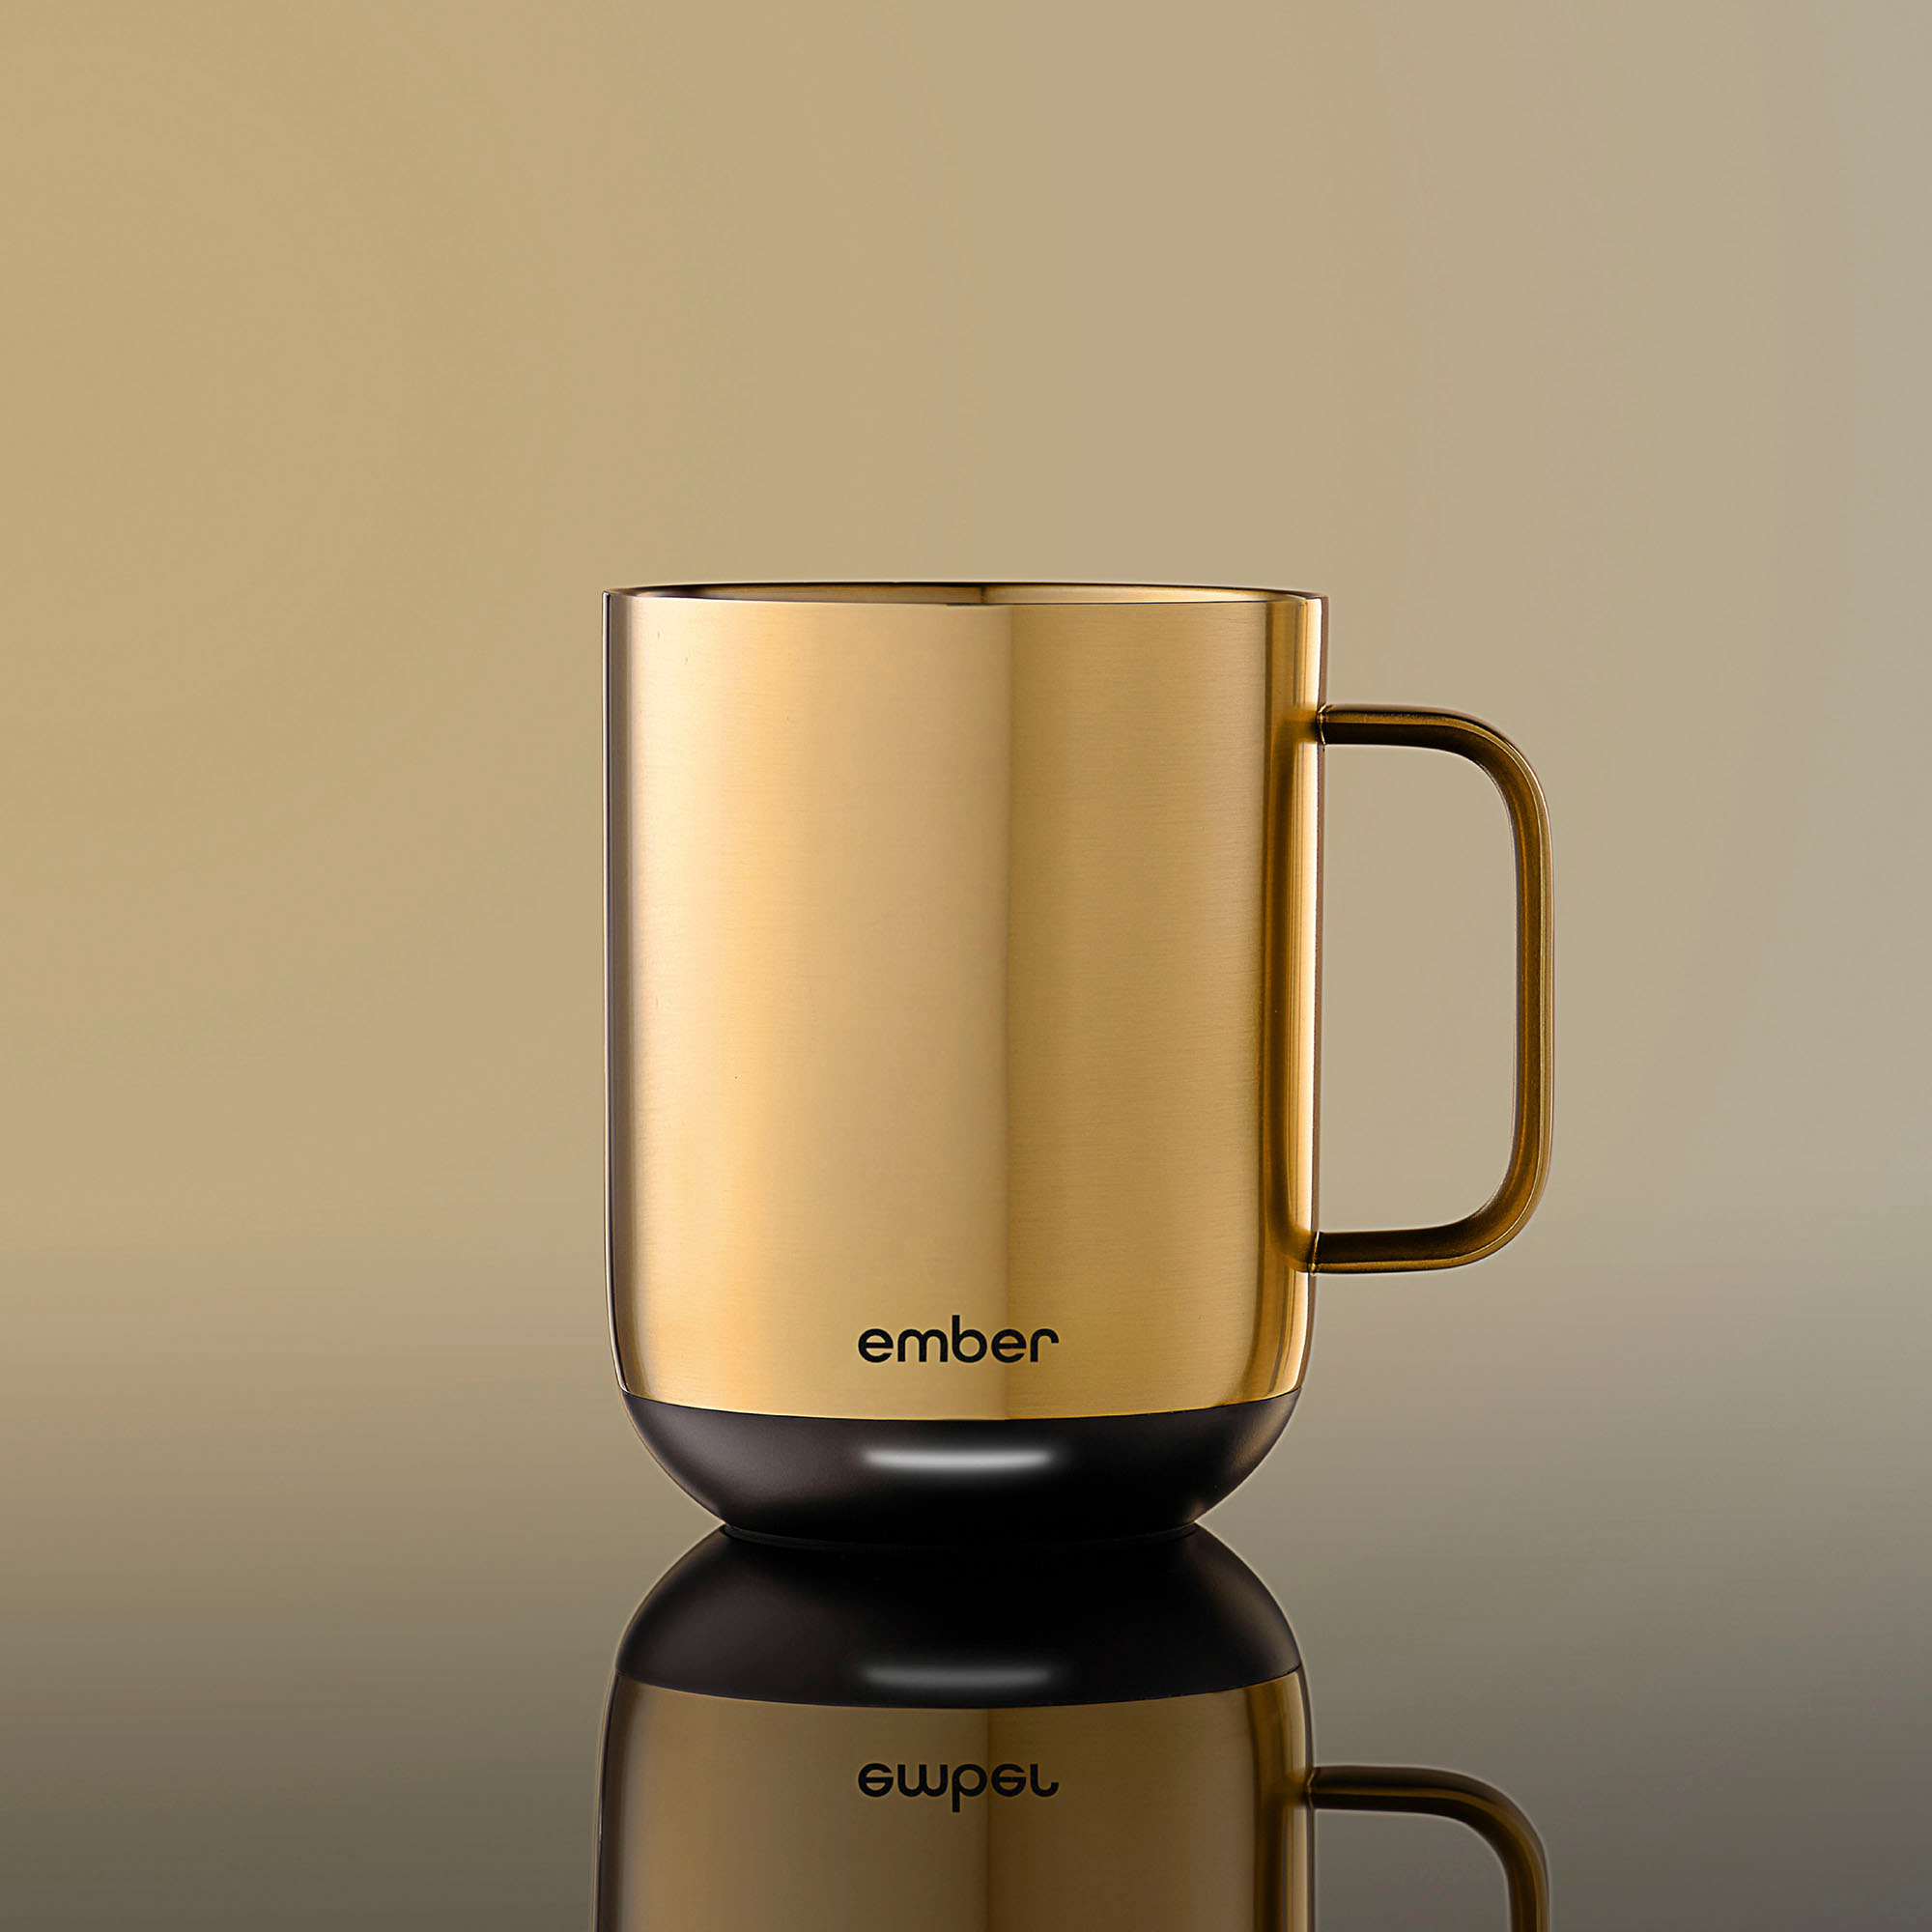 Ember Temperature Control Smart Mug² 10 oz Rose Gold CM191006US - Best Buy